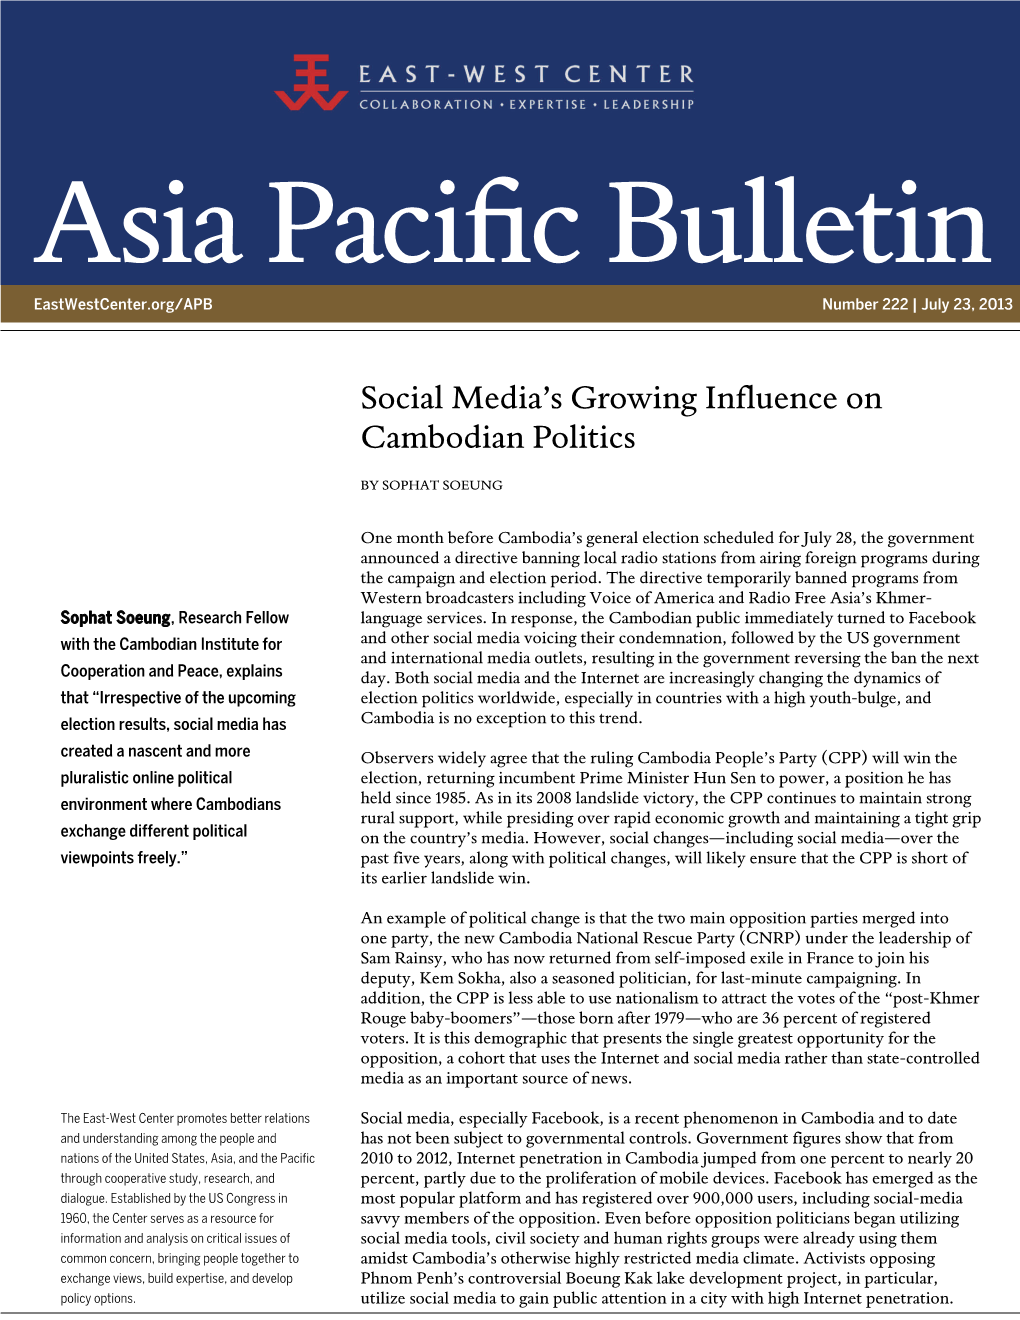 Social Media's Growing Influence on Cambodian Politics